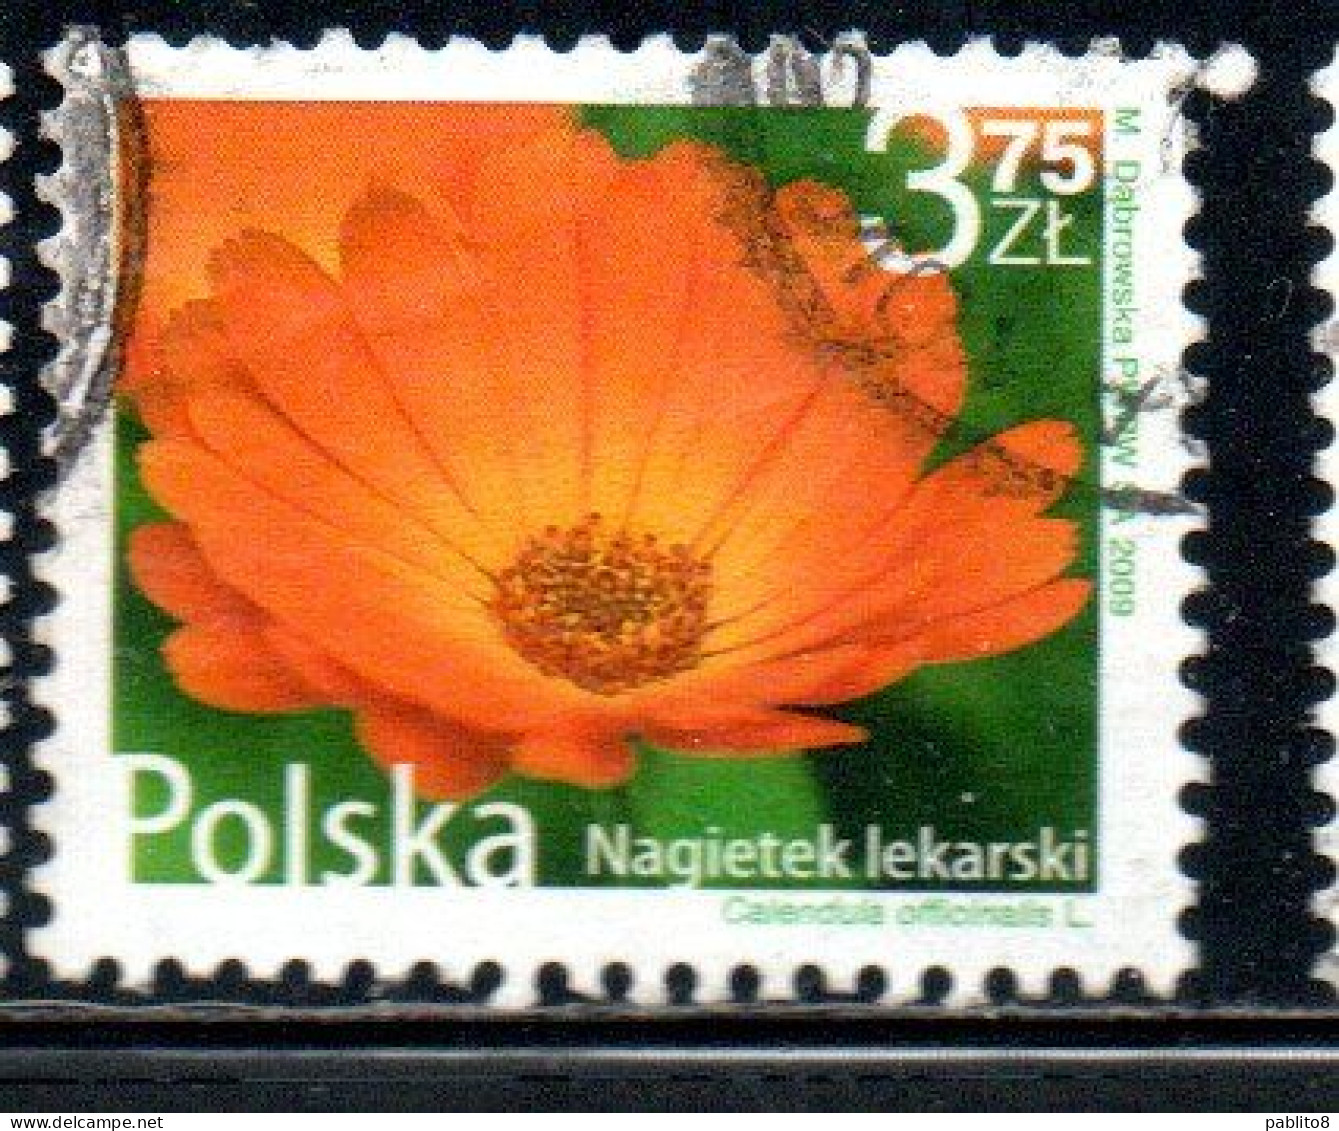 POLONIA POLAND POLSKA 2009 FRUIT AND FLOWERS CALENDULA OFFICINALIS 3.75z USED USATO OBLITERE' - Usati